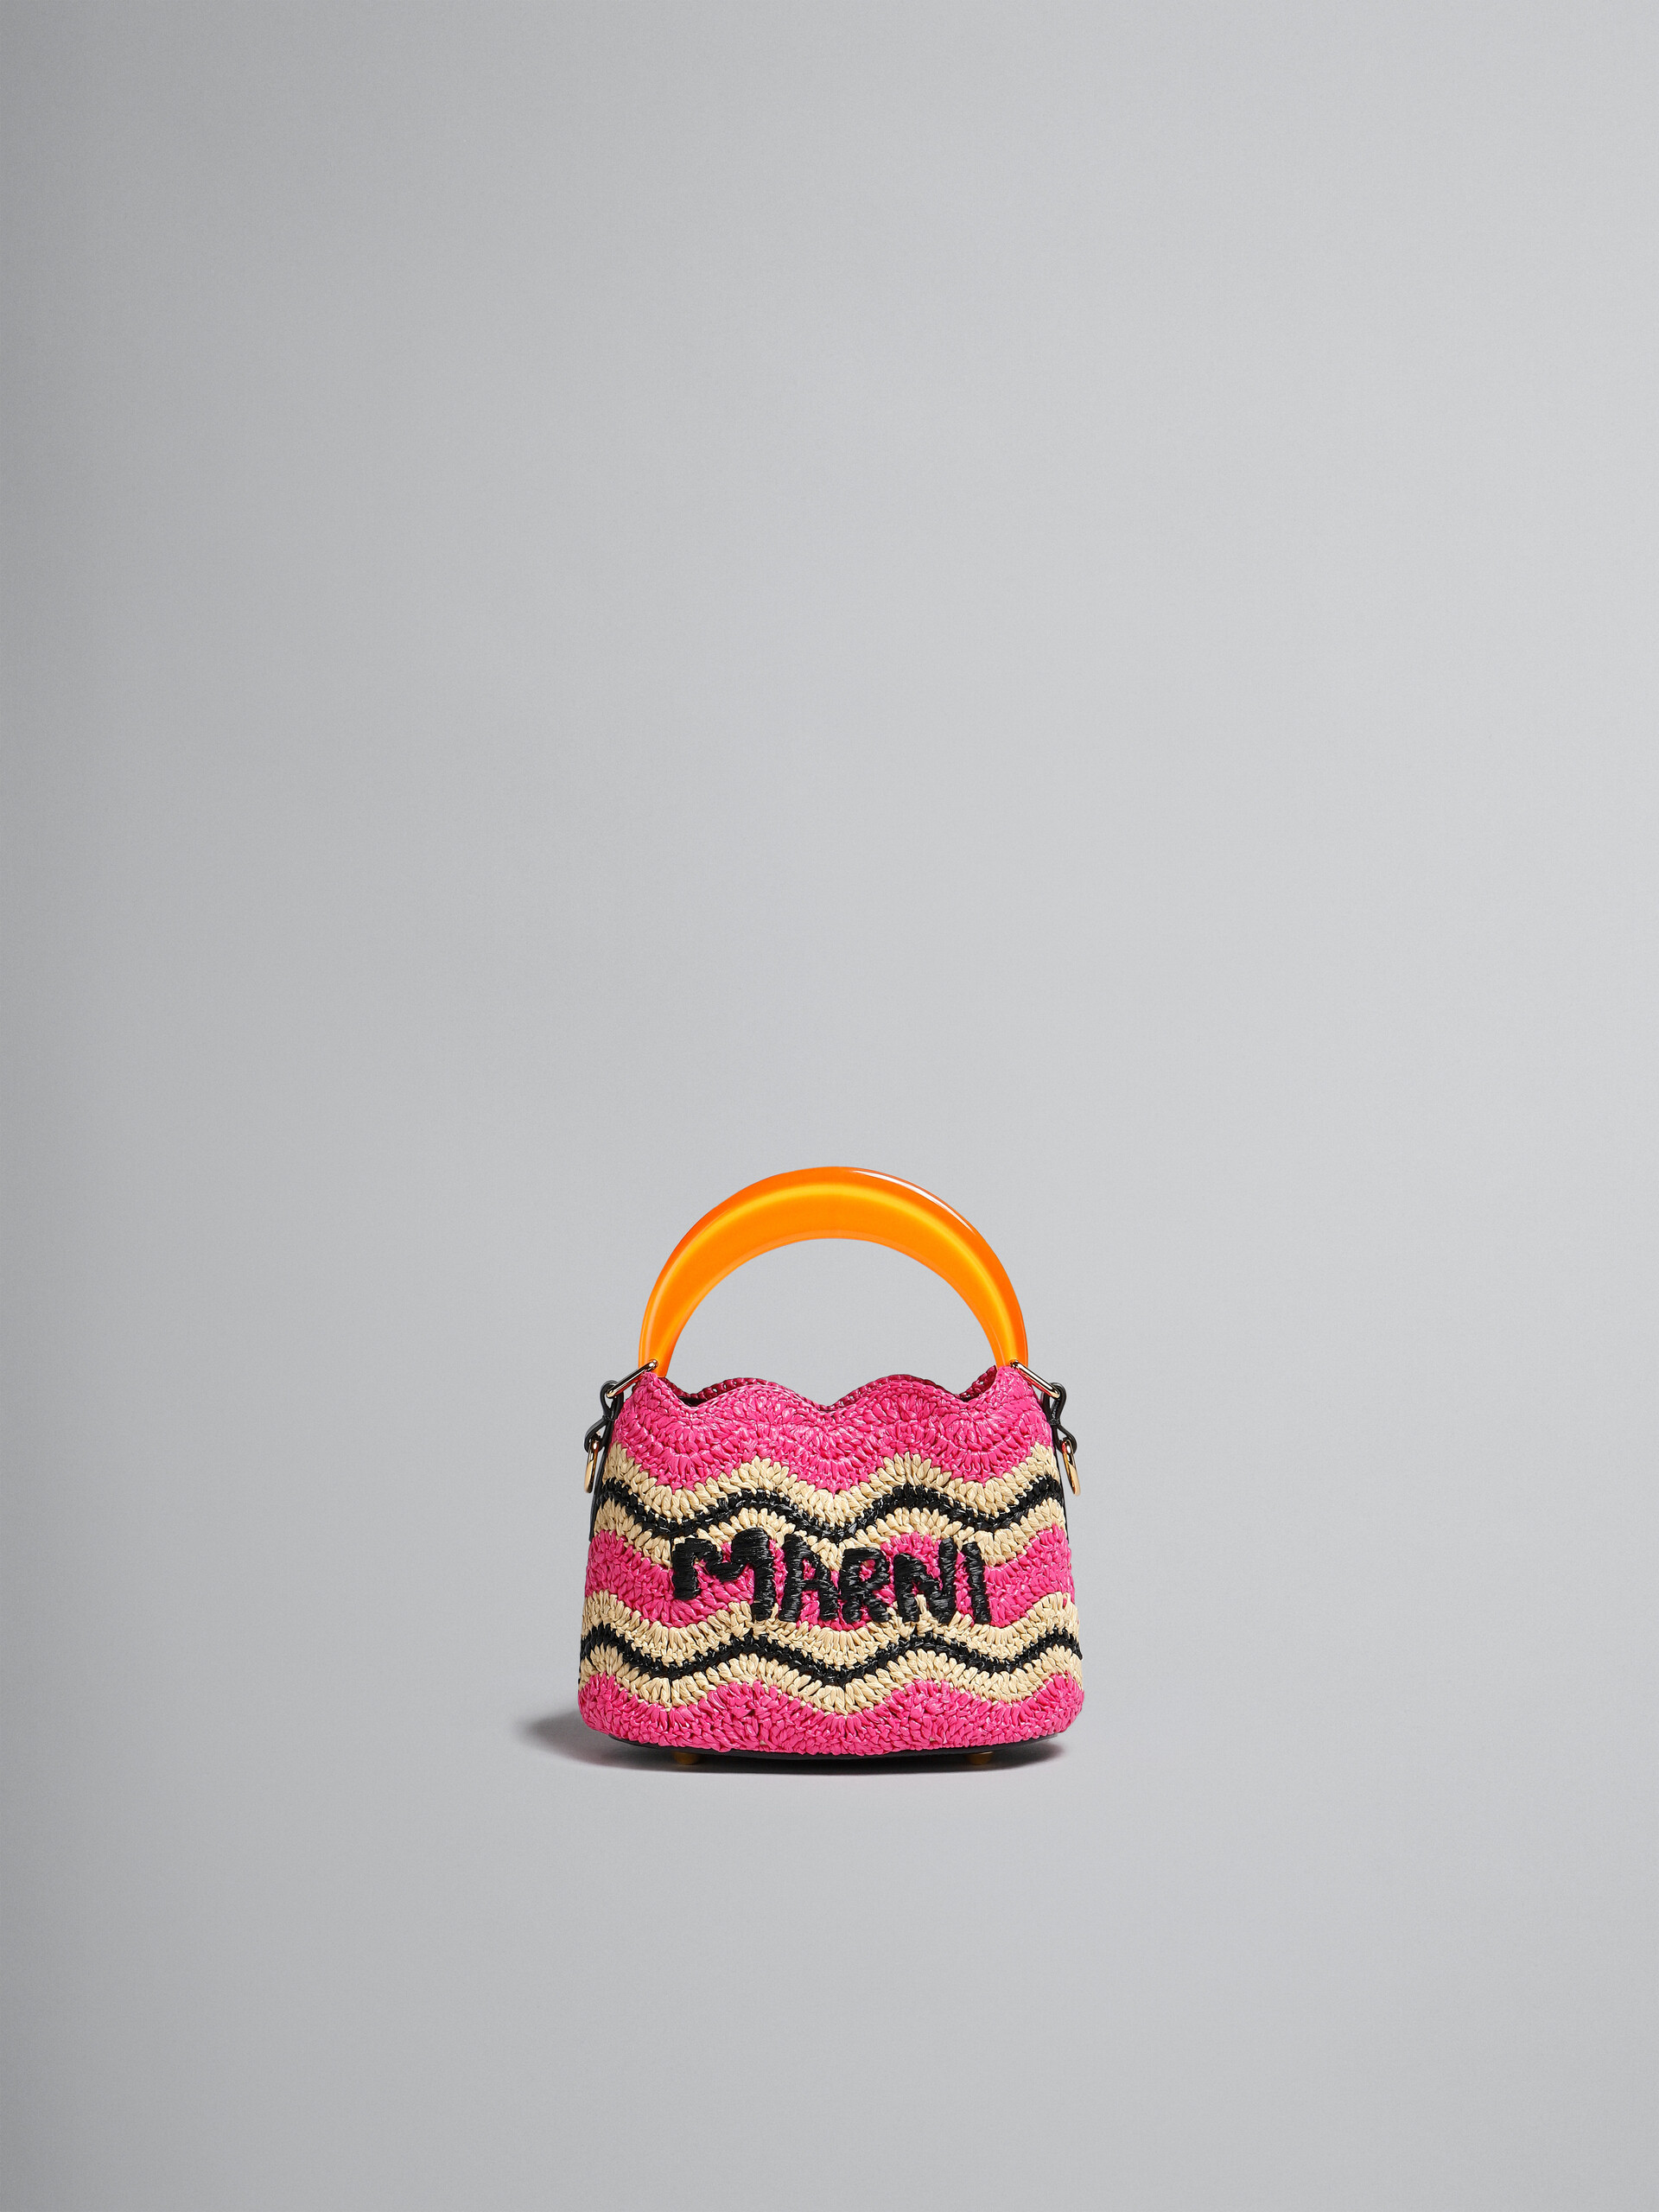 Marni x No Vacancy Inn - Venice Mini Bucket in fuchsia crochet raffia - Shoulder Bag - Image 1